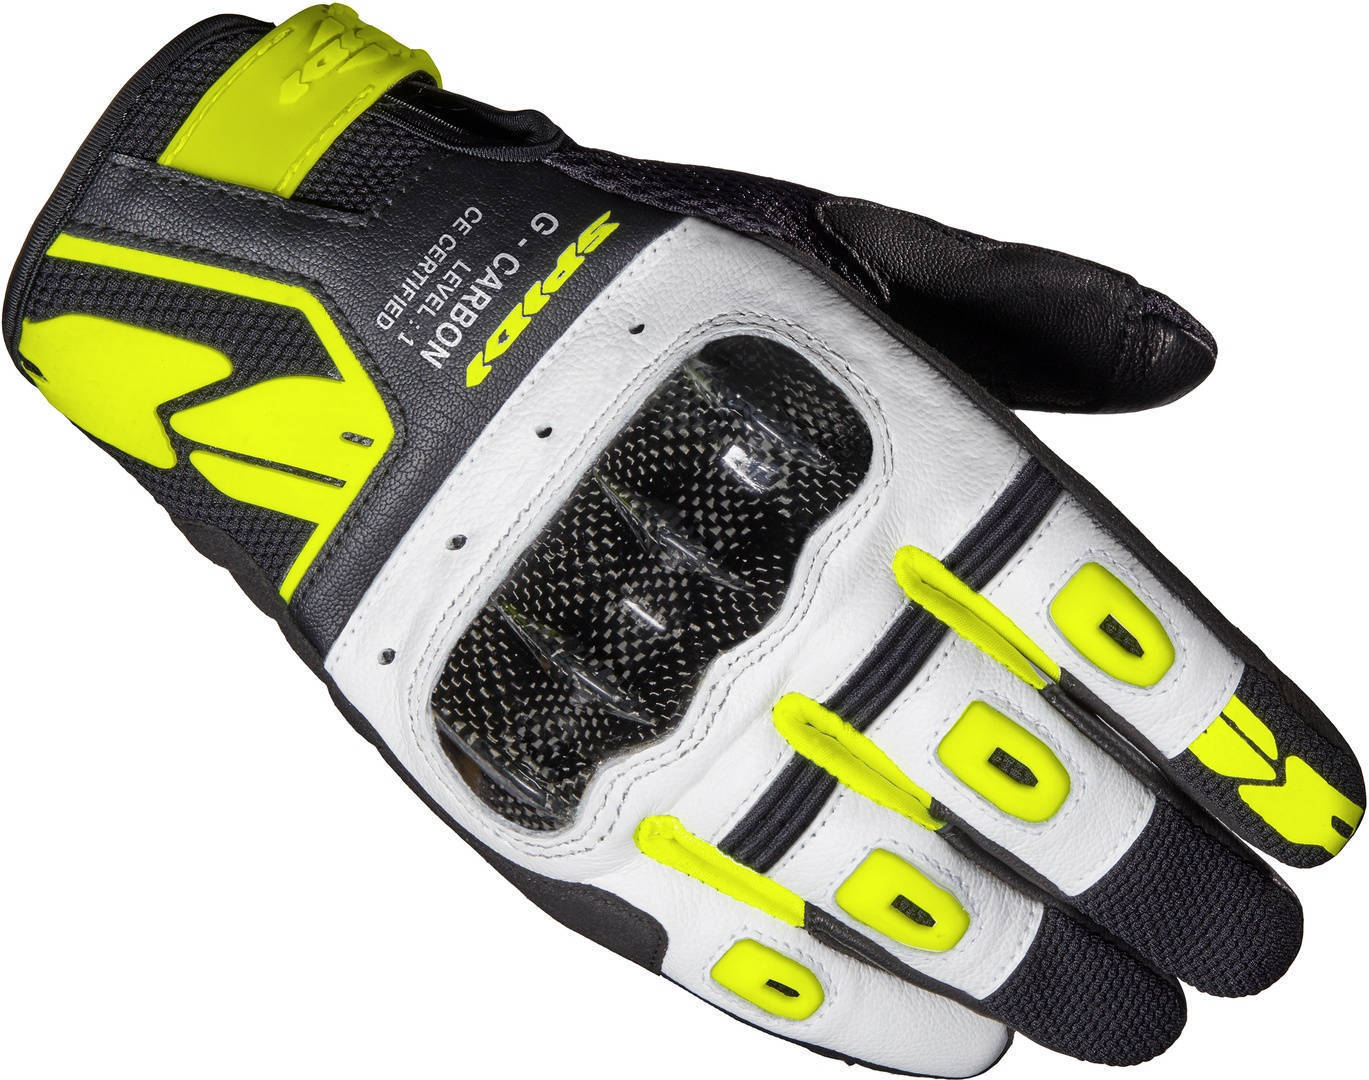 Spidi G-Carbon Motorcycle Gloves  - Black Yellow